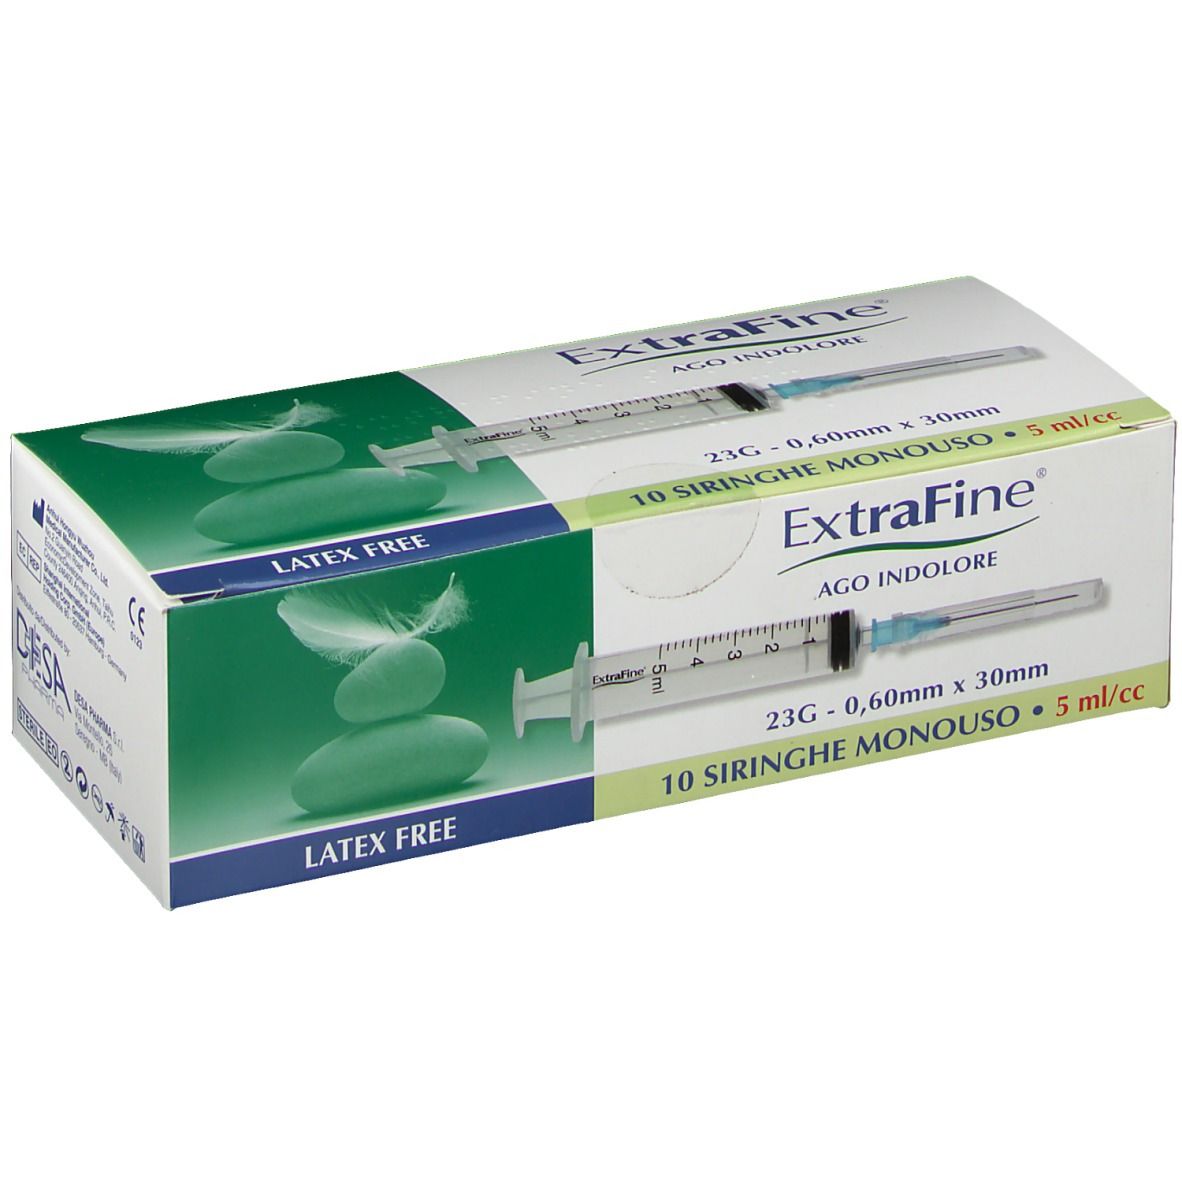 Extrafine® Ago Indolore 5 ml 23G